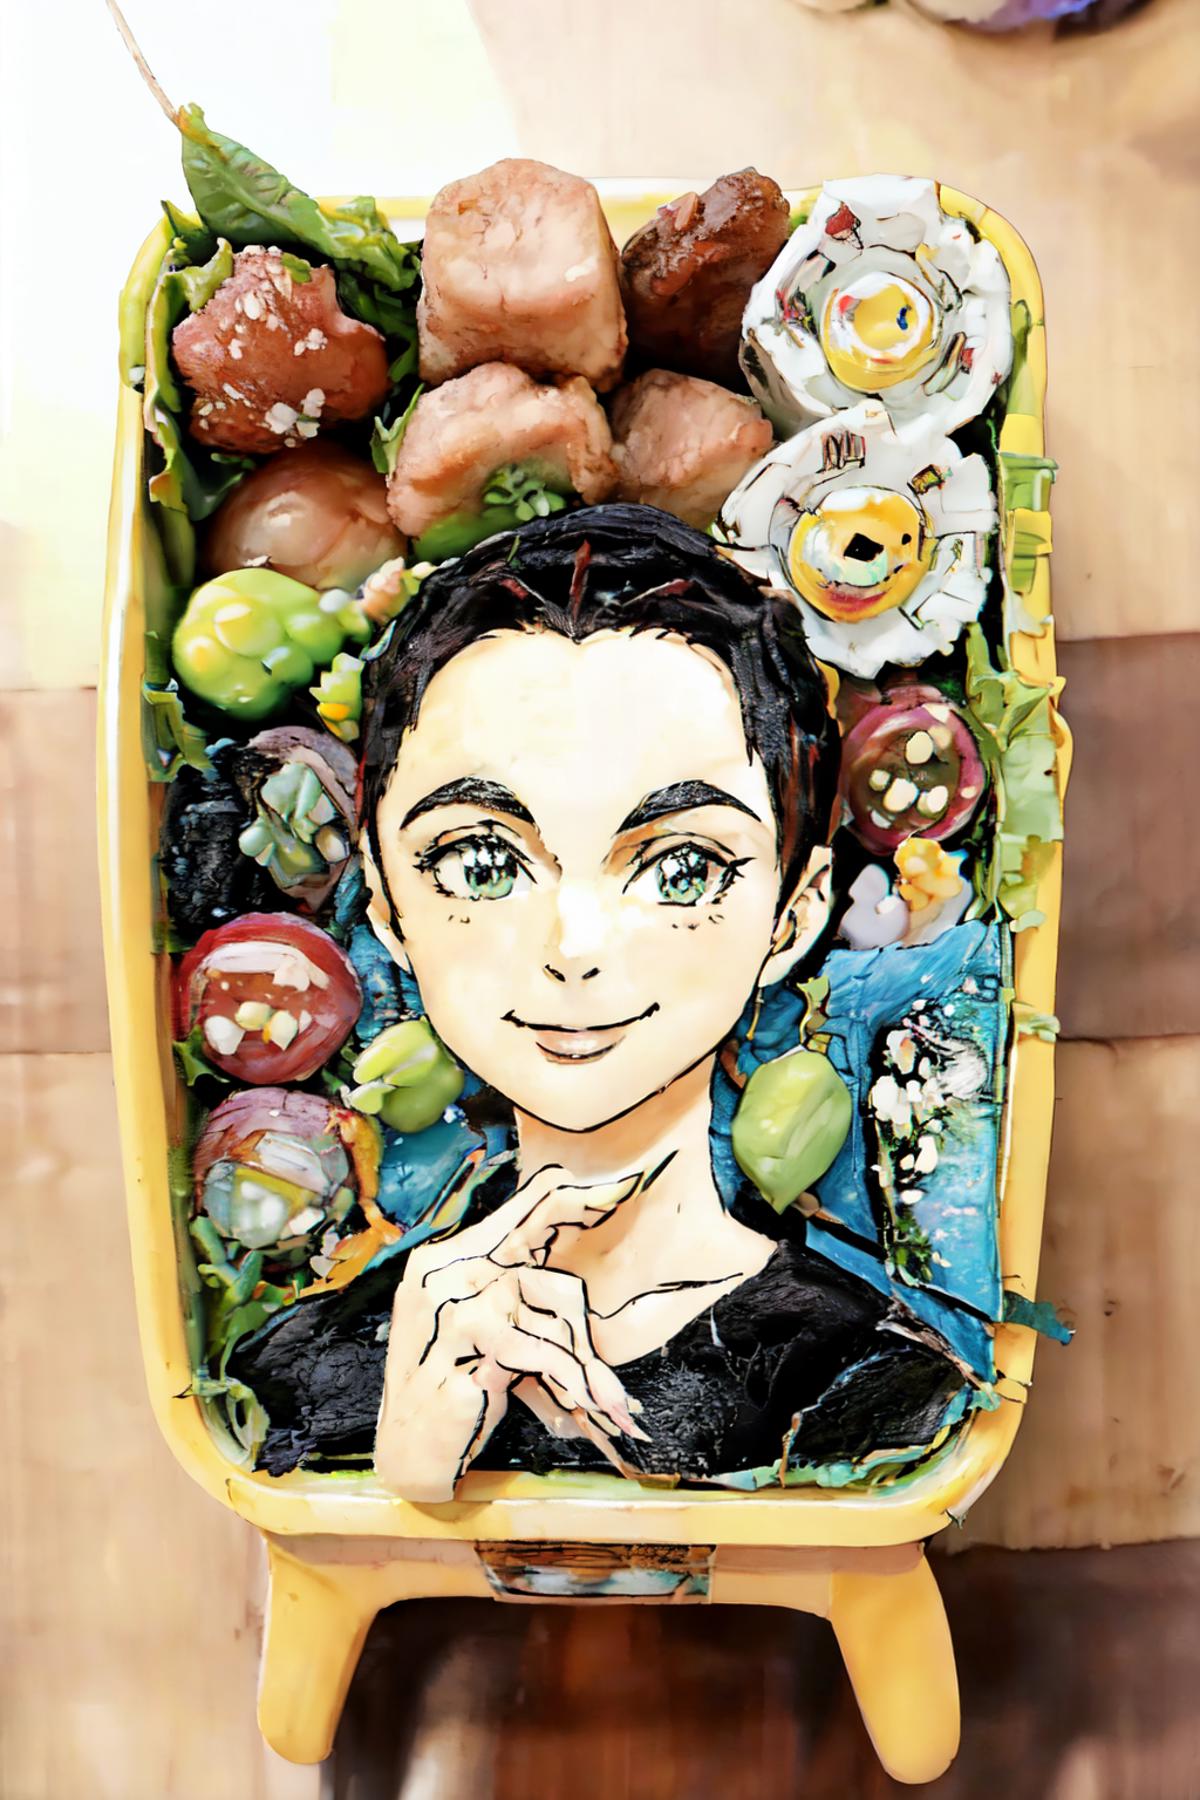 [Concept] [Food] Kyaraben (Charaben) / キャラ弁 - Anime Bento Boxes image by kokurine